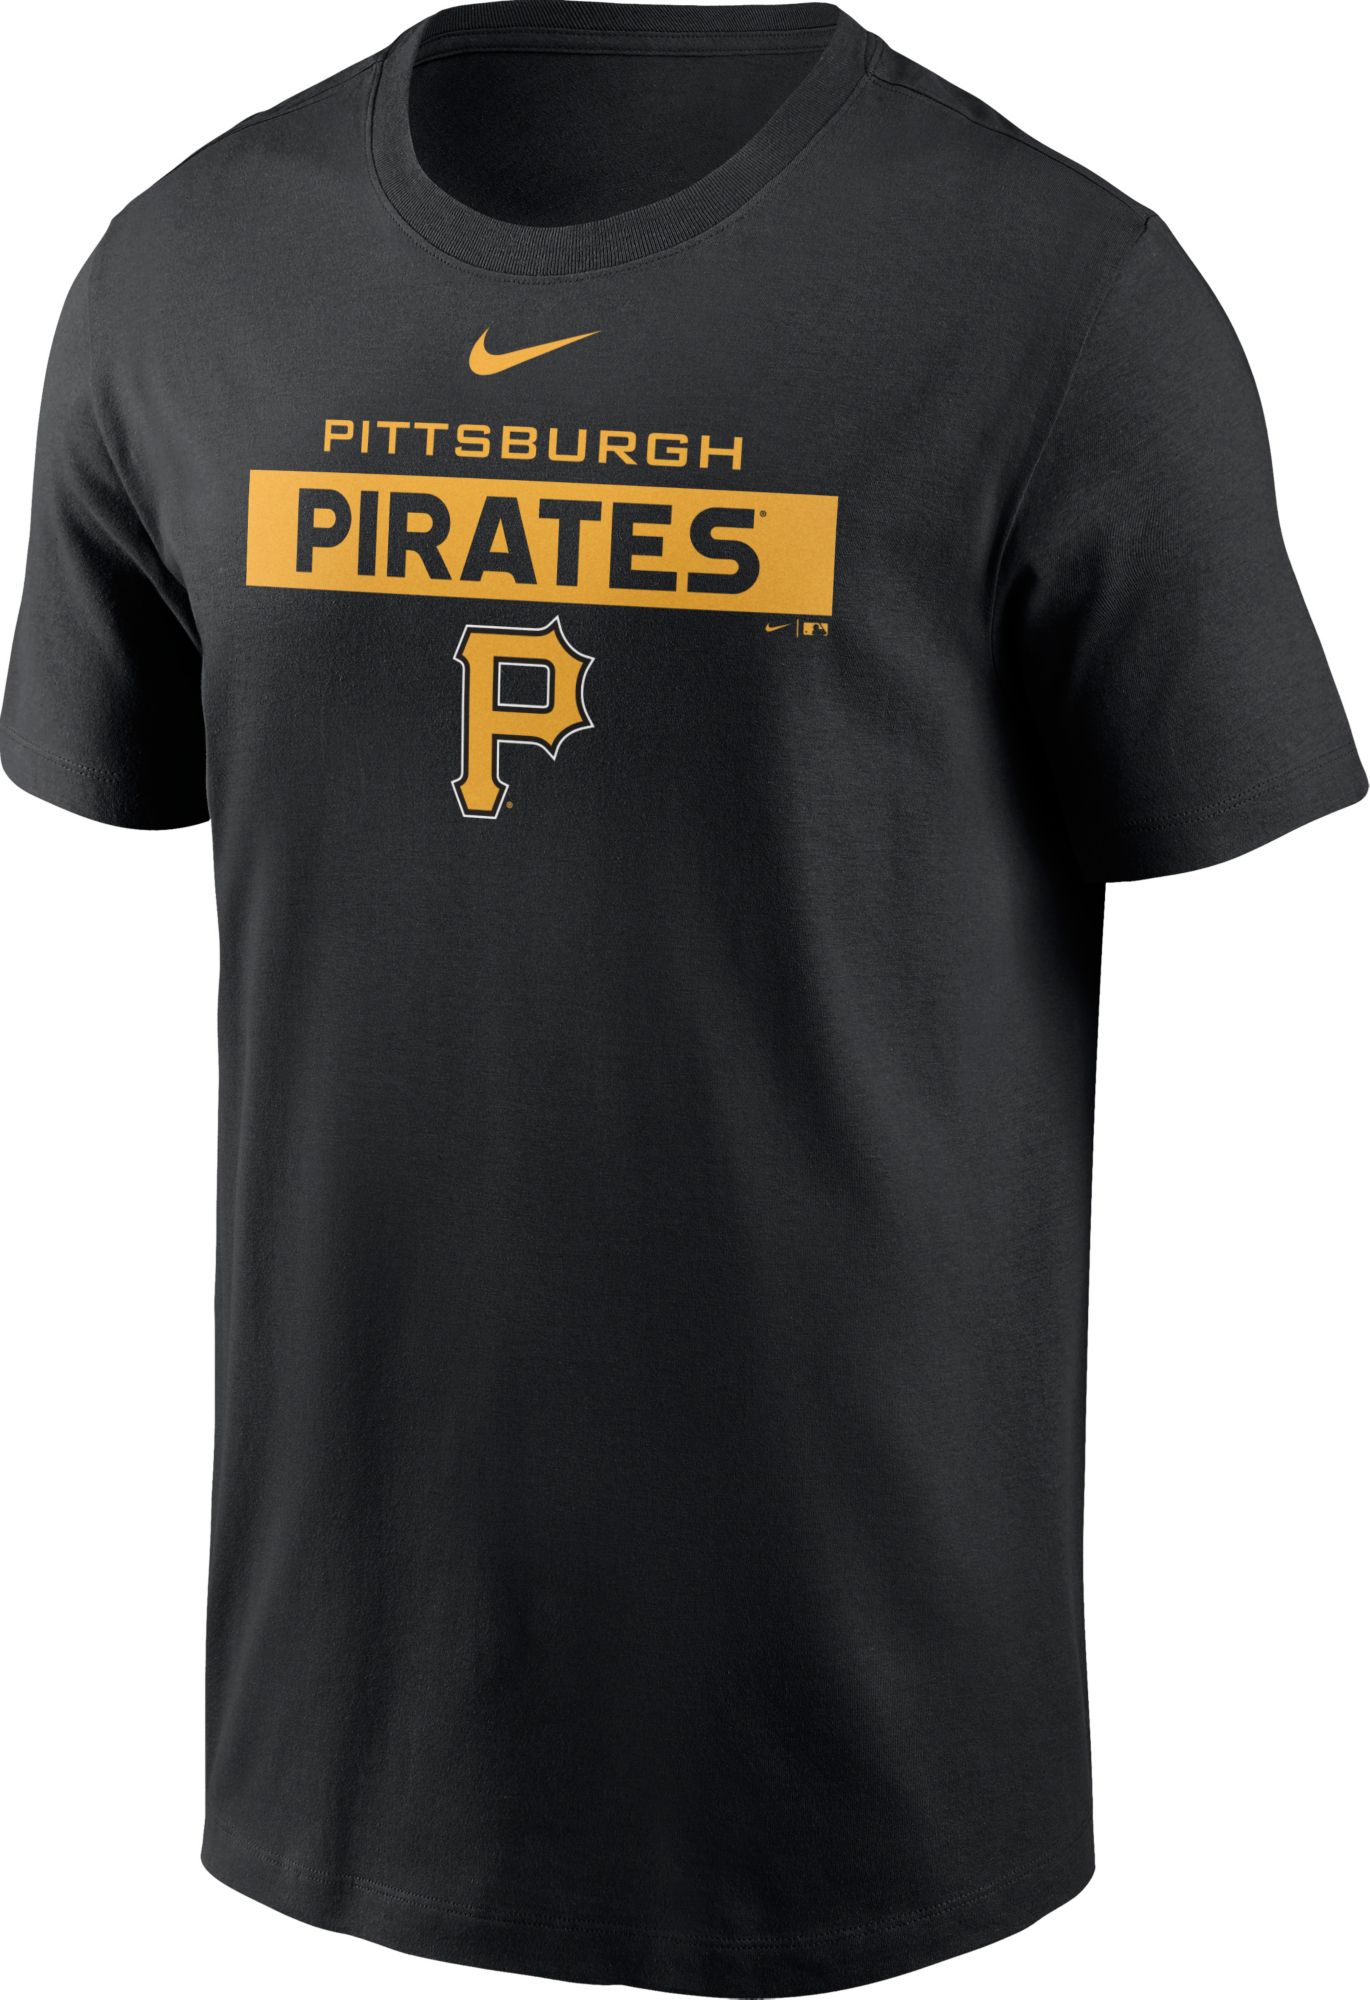 Andrew Mccutchen Baseball Pittsburgh Bucn T-shirt. By Artistshot